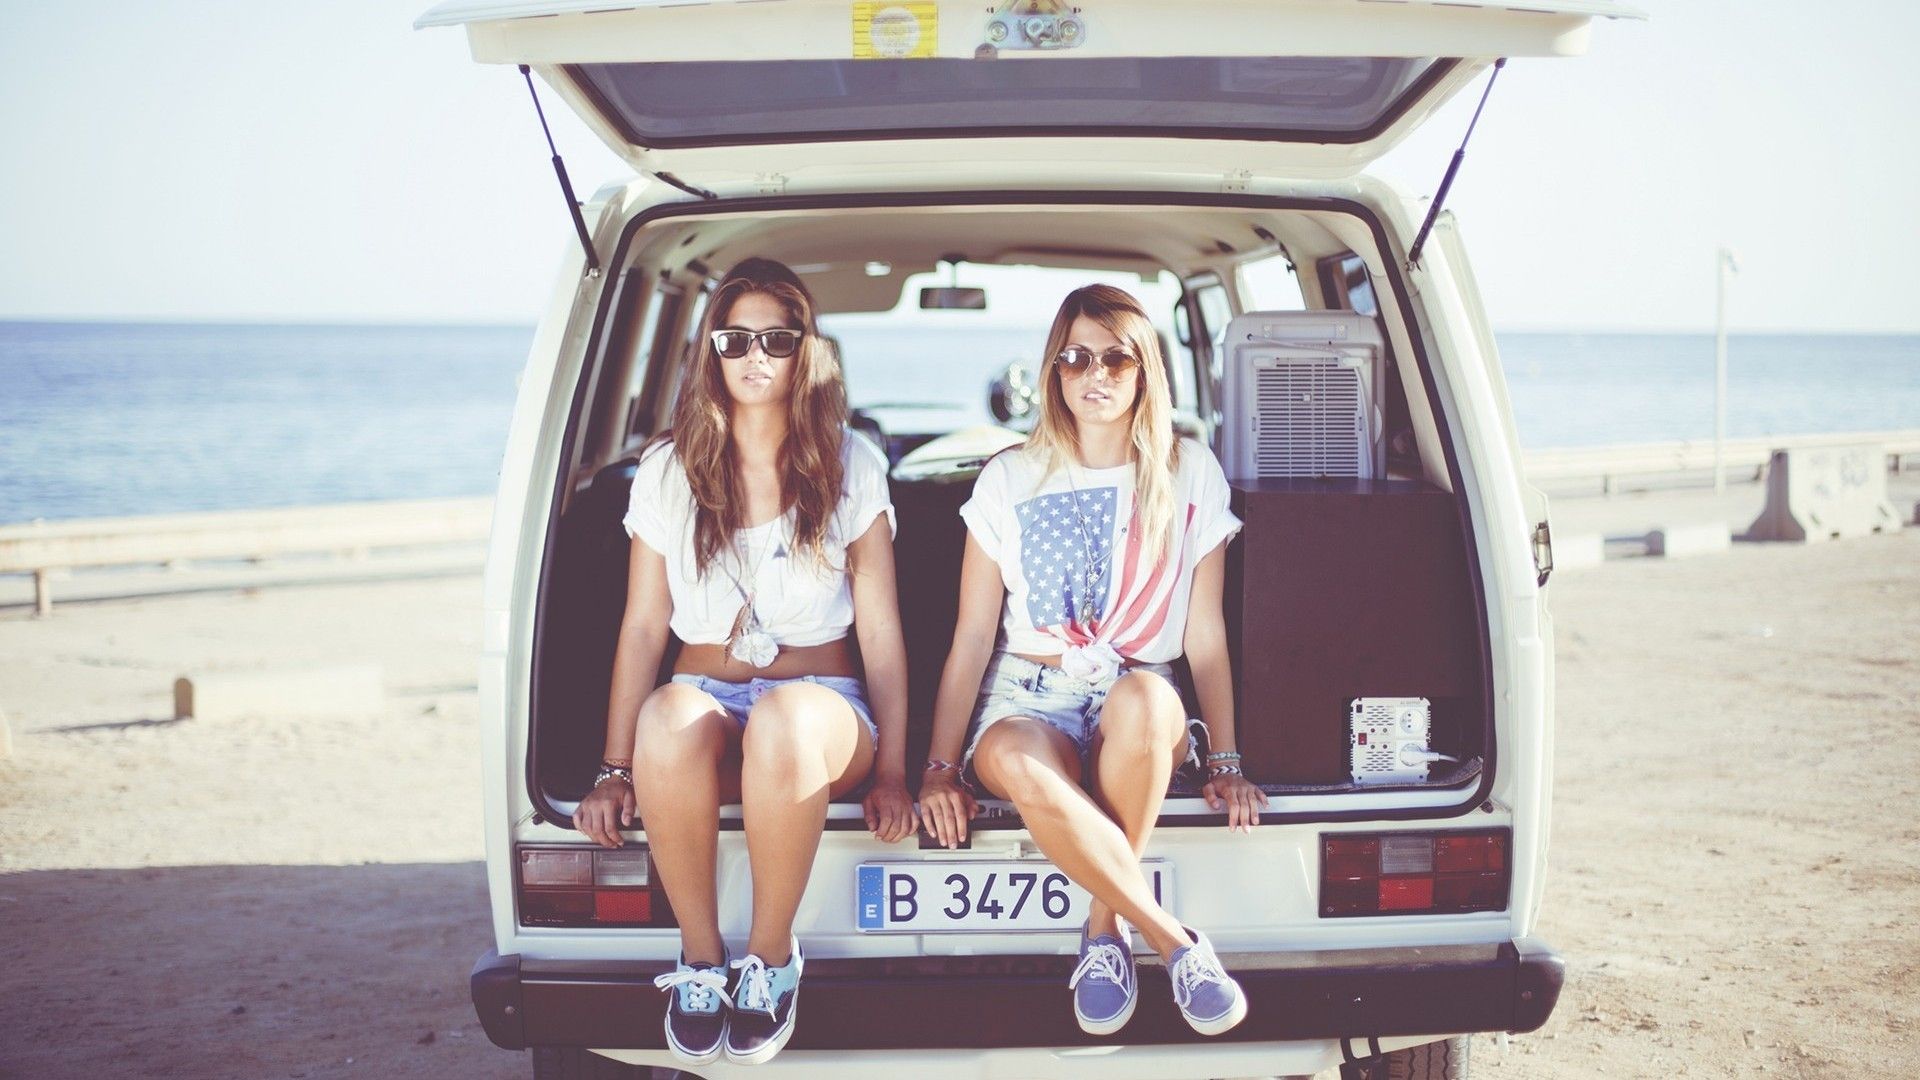 Wallpaper, women, car, vehicle, beach, Volkswagen, jean shorts, Spain, spring, vacation, image, vacations, 1920x1080 px, photo shoot 1920x1080